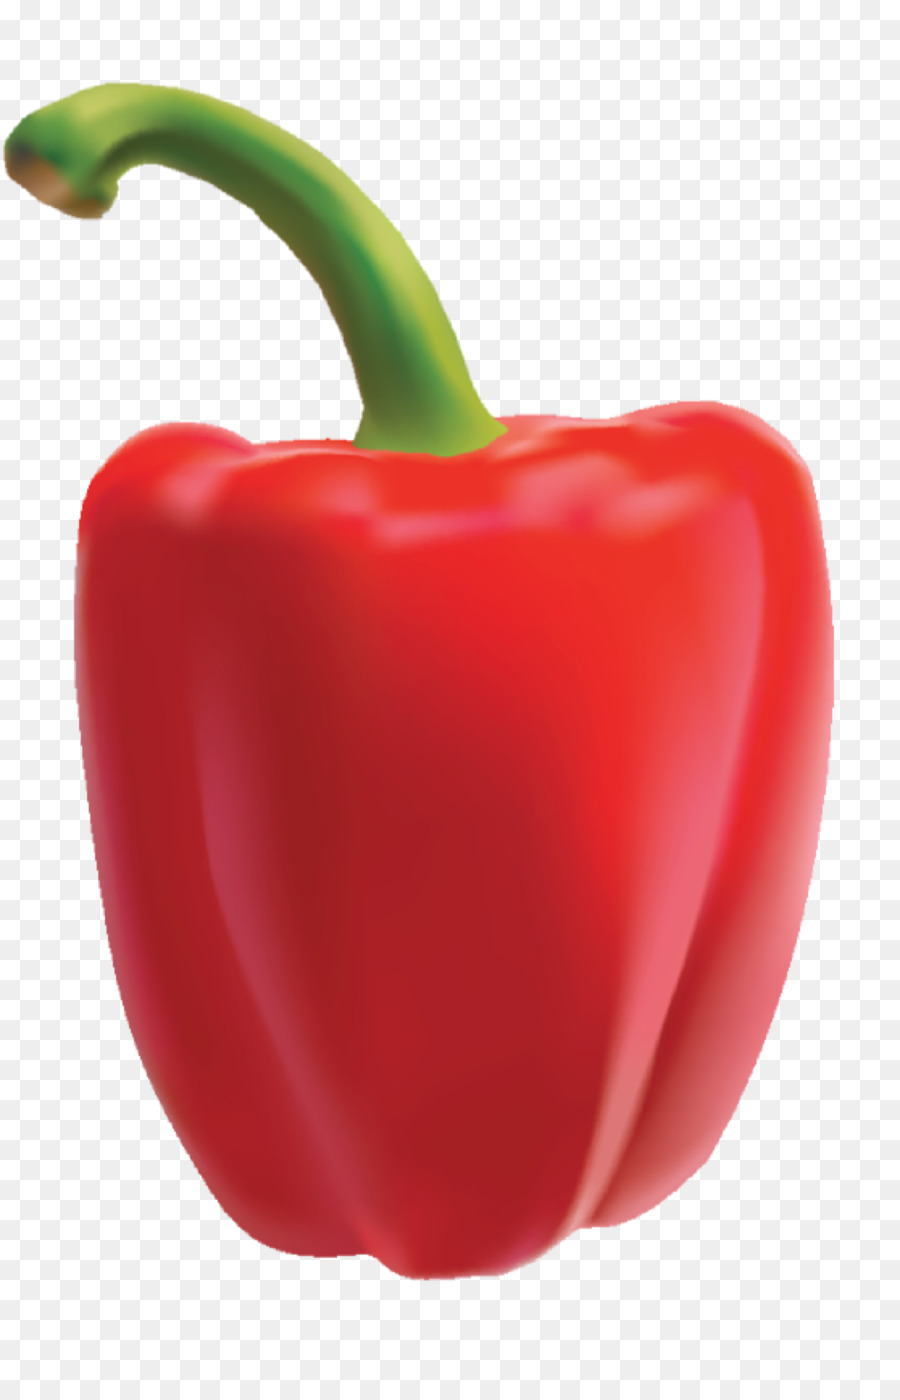 Bell pepper Stamppot Pflanzliche Nahrung Schwarzer Pfeffer - Pfeffer